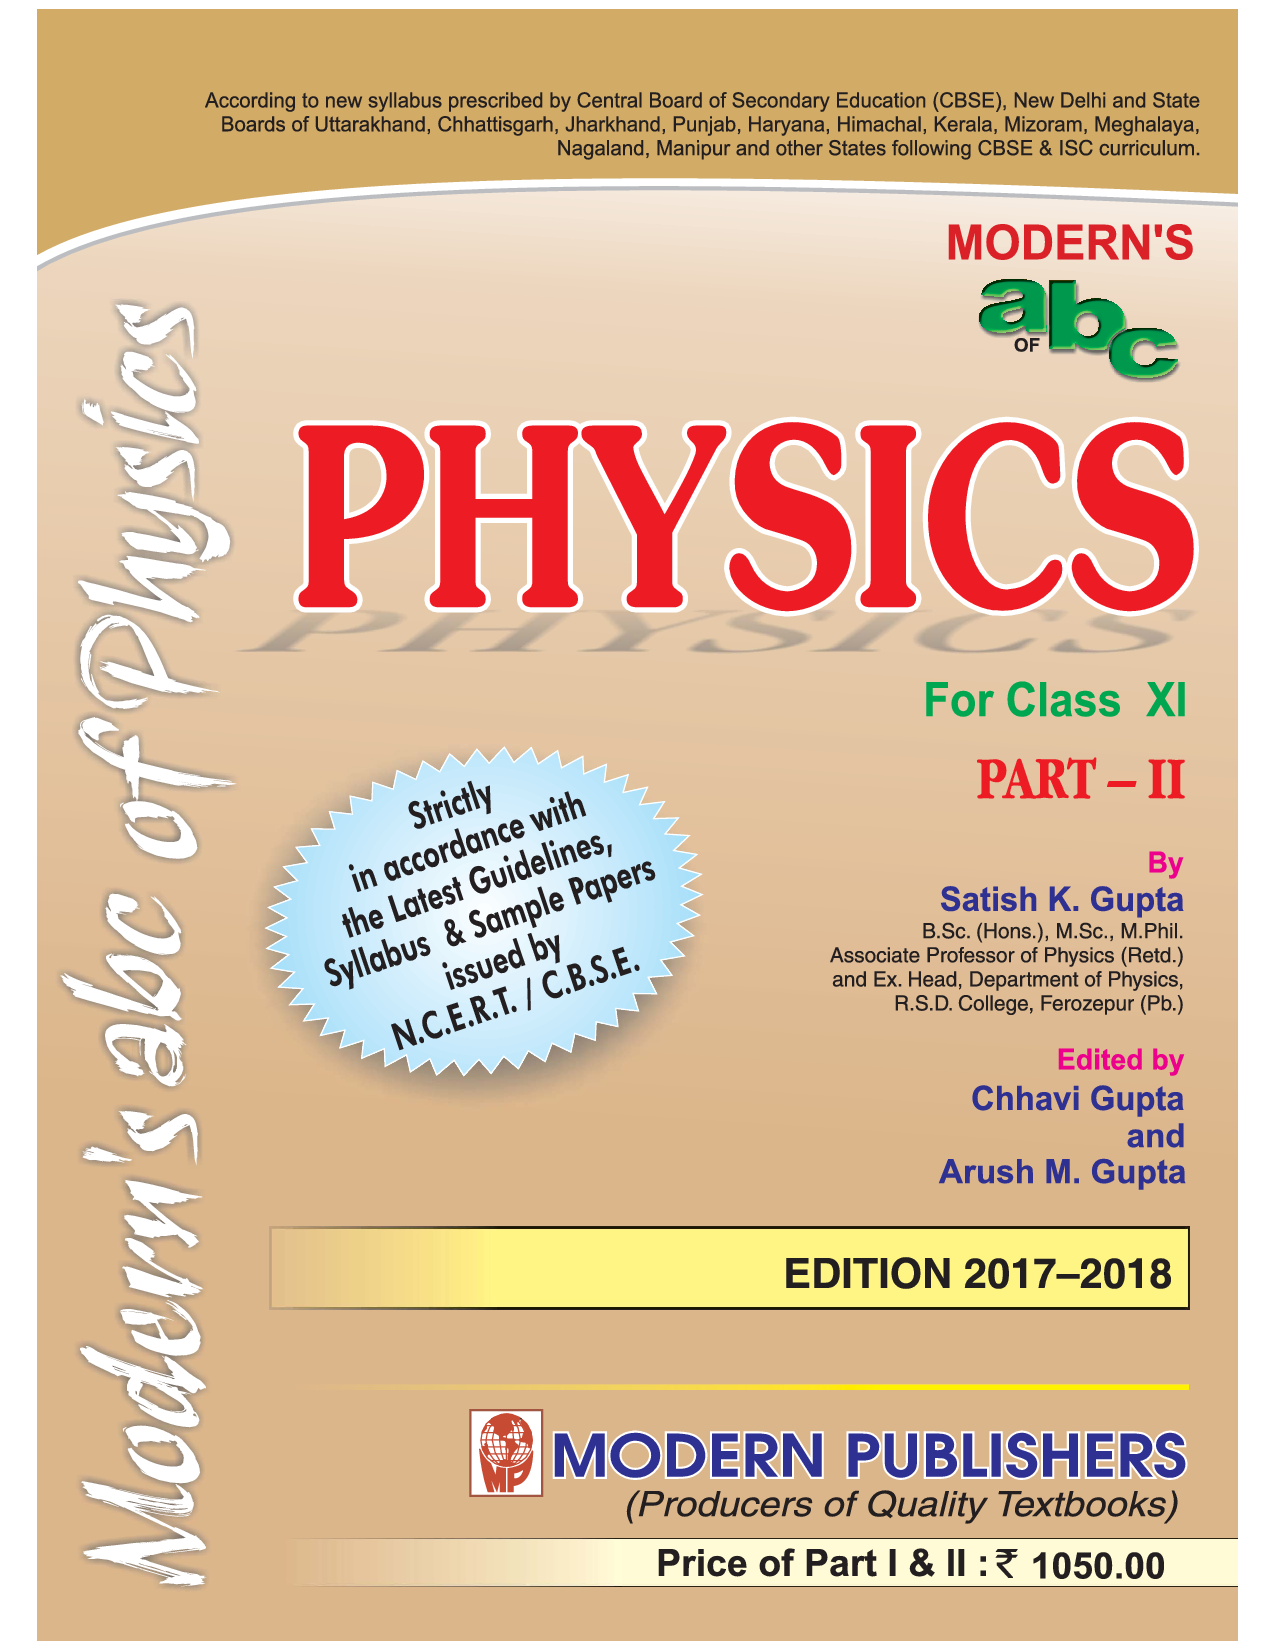 Phy 212 applied mechanics full book pdf